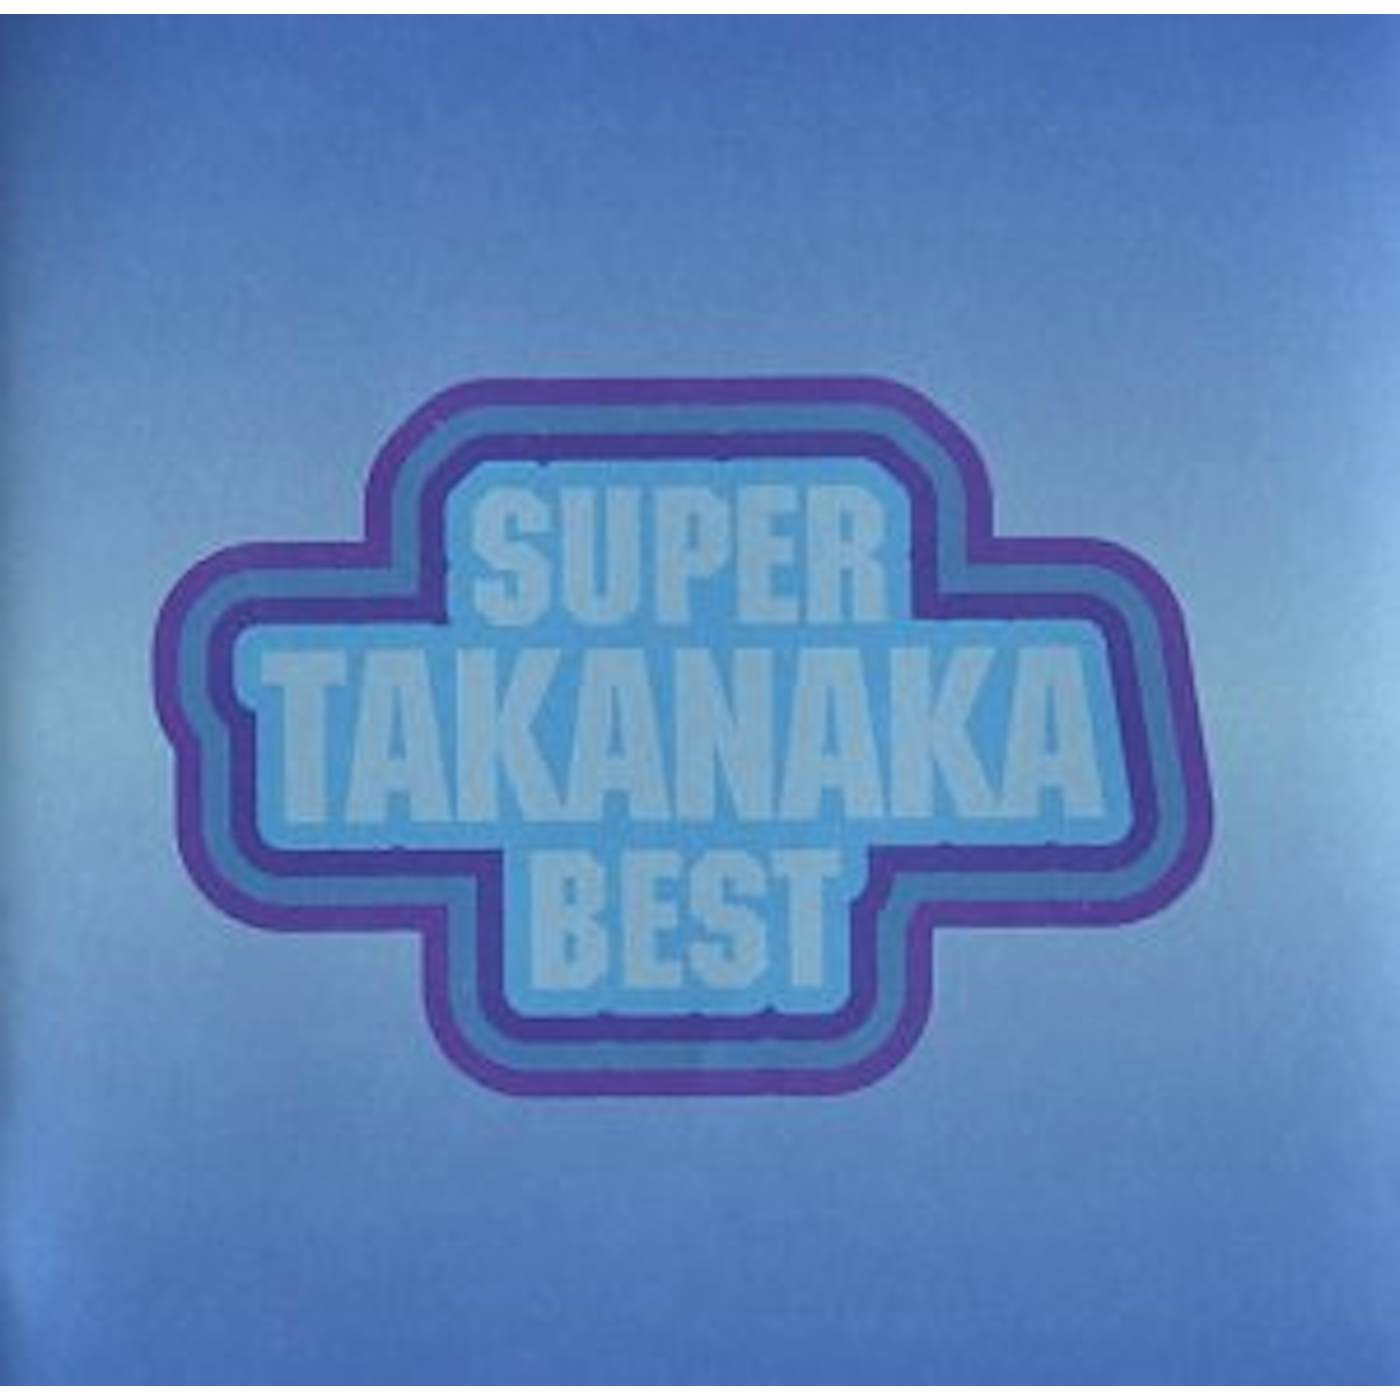 Masayoshi Takanaka SUPER TAKANAKA BEST CD